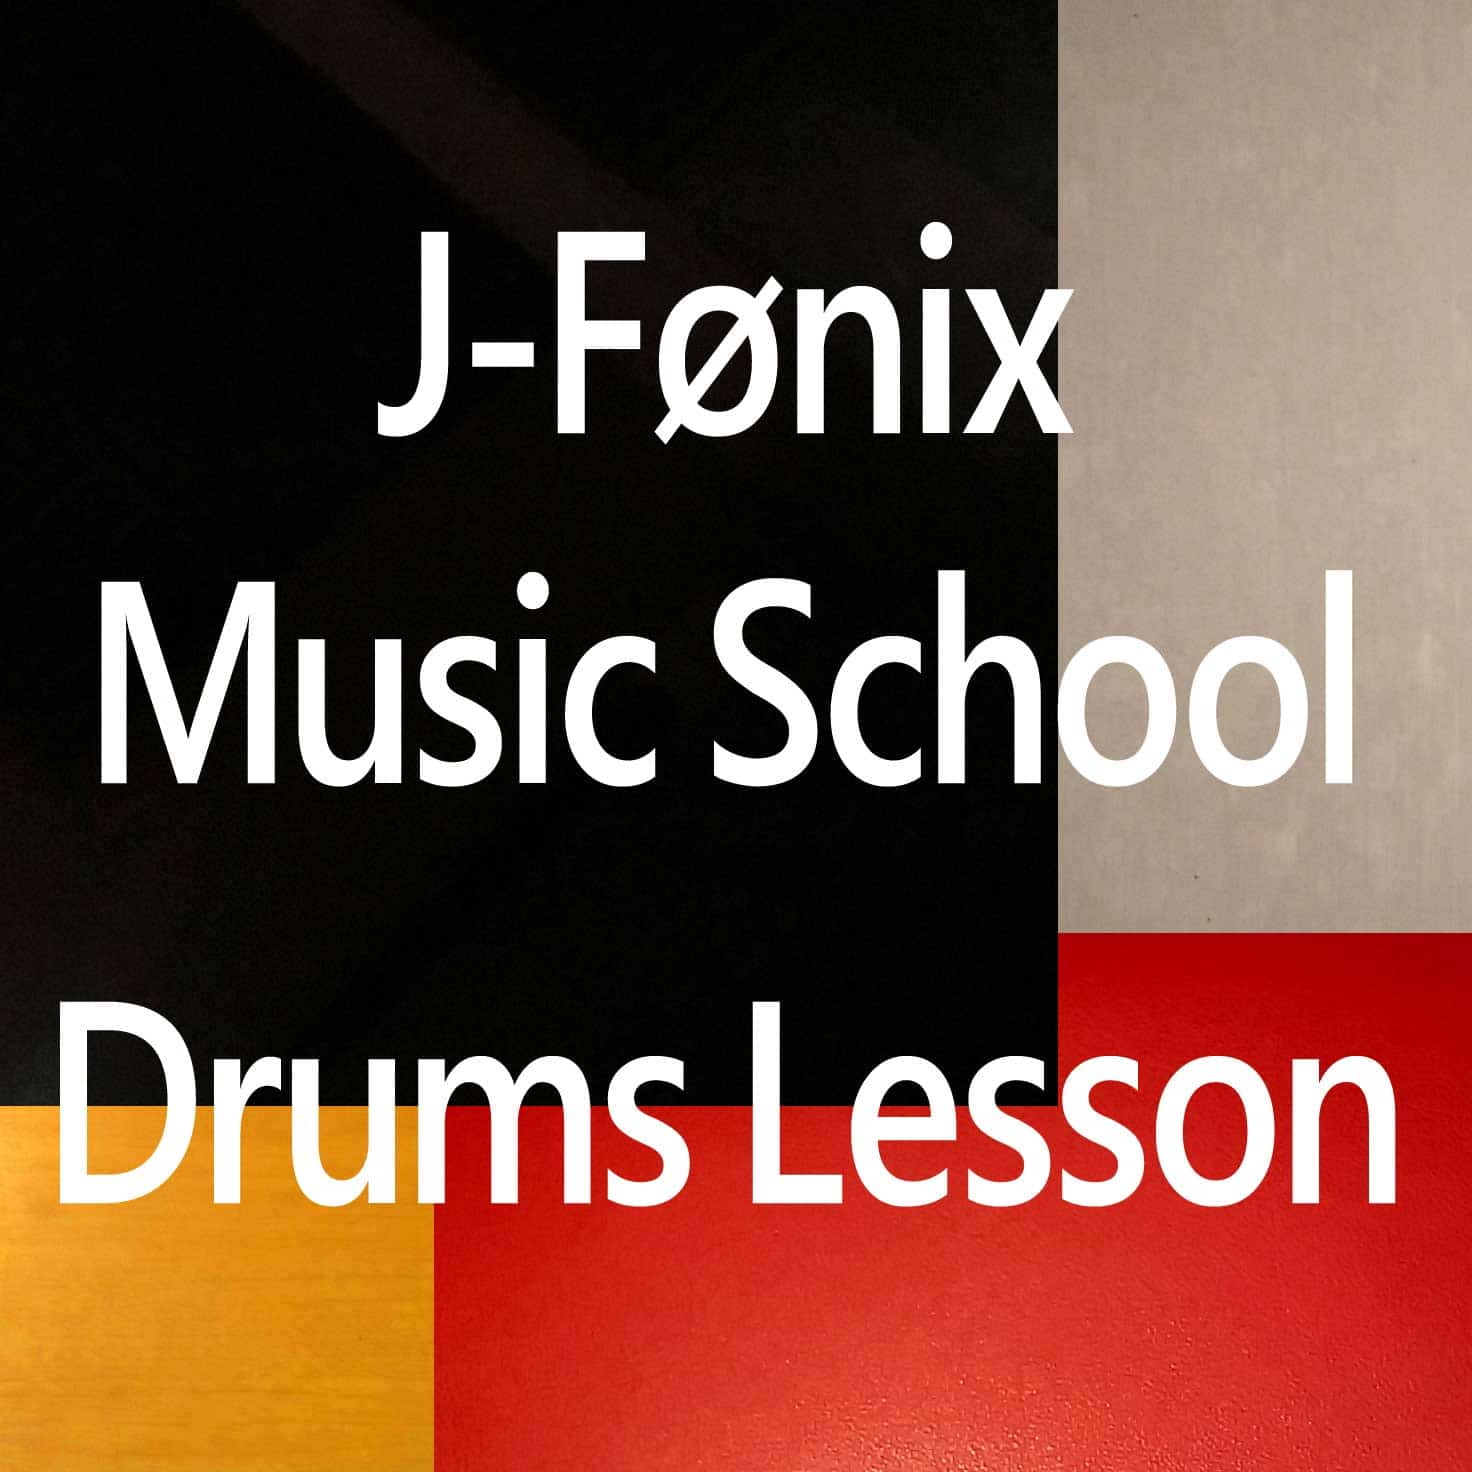 J-Fenix Music School Drums Lesson画像資料1